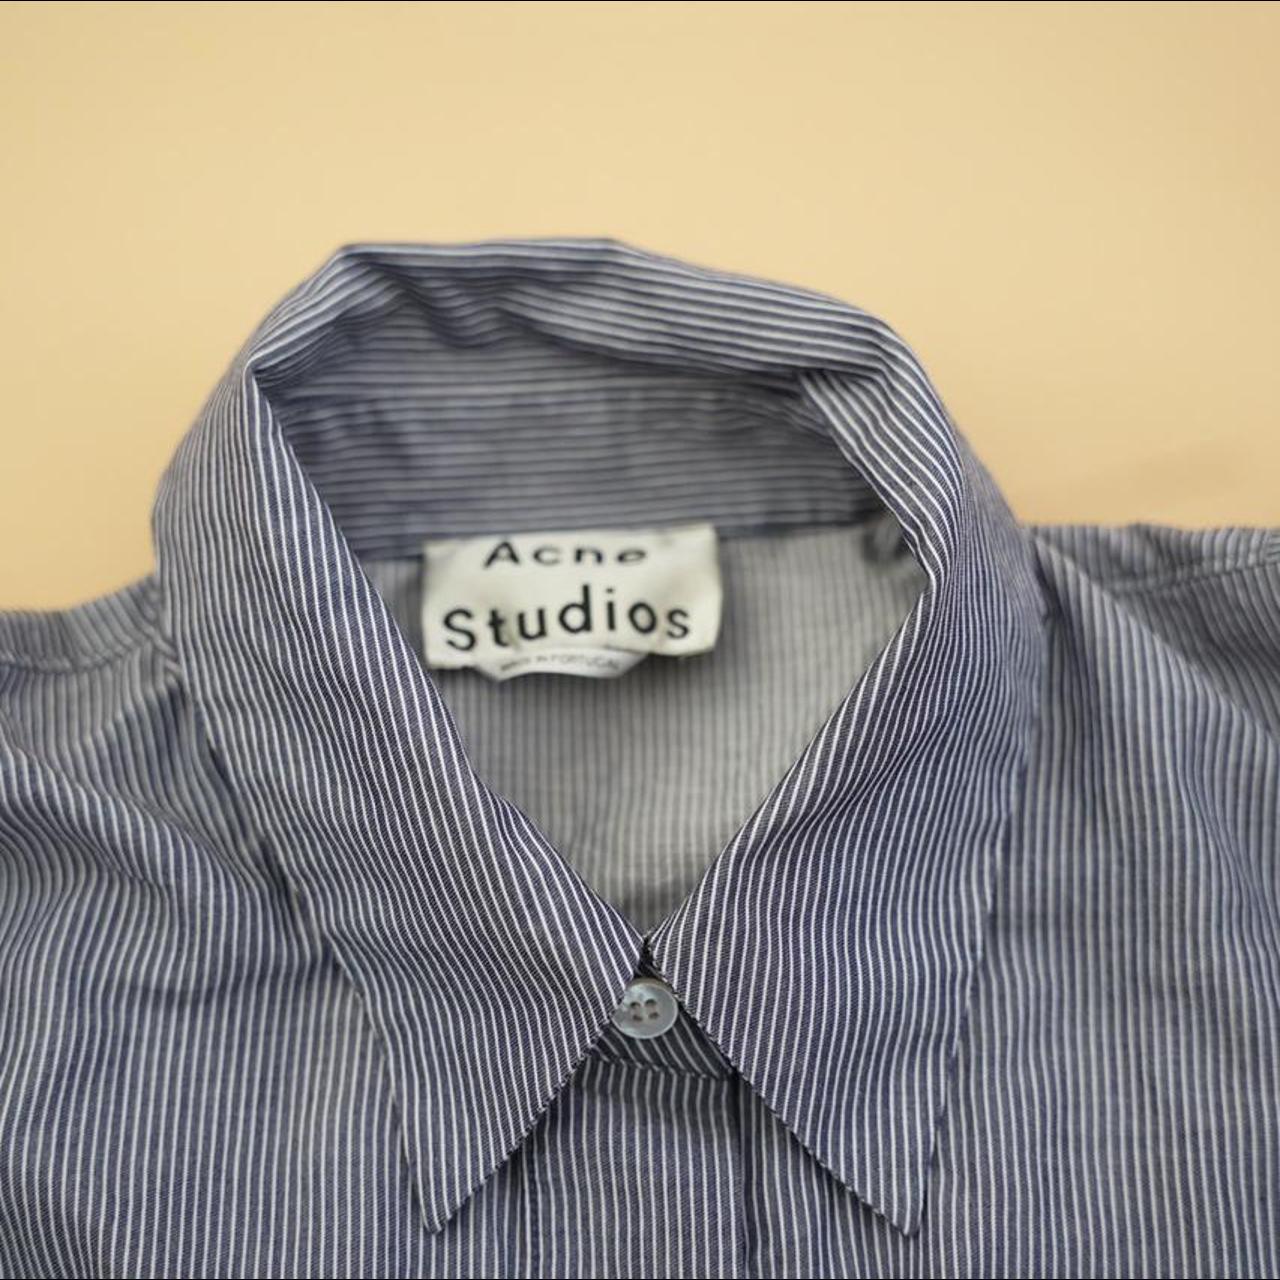 Acne Studios Women's Shirt